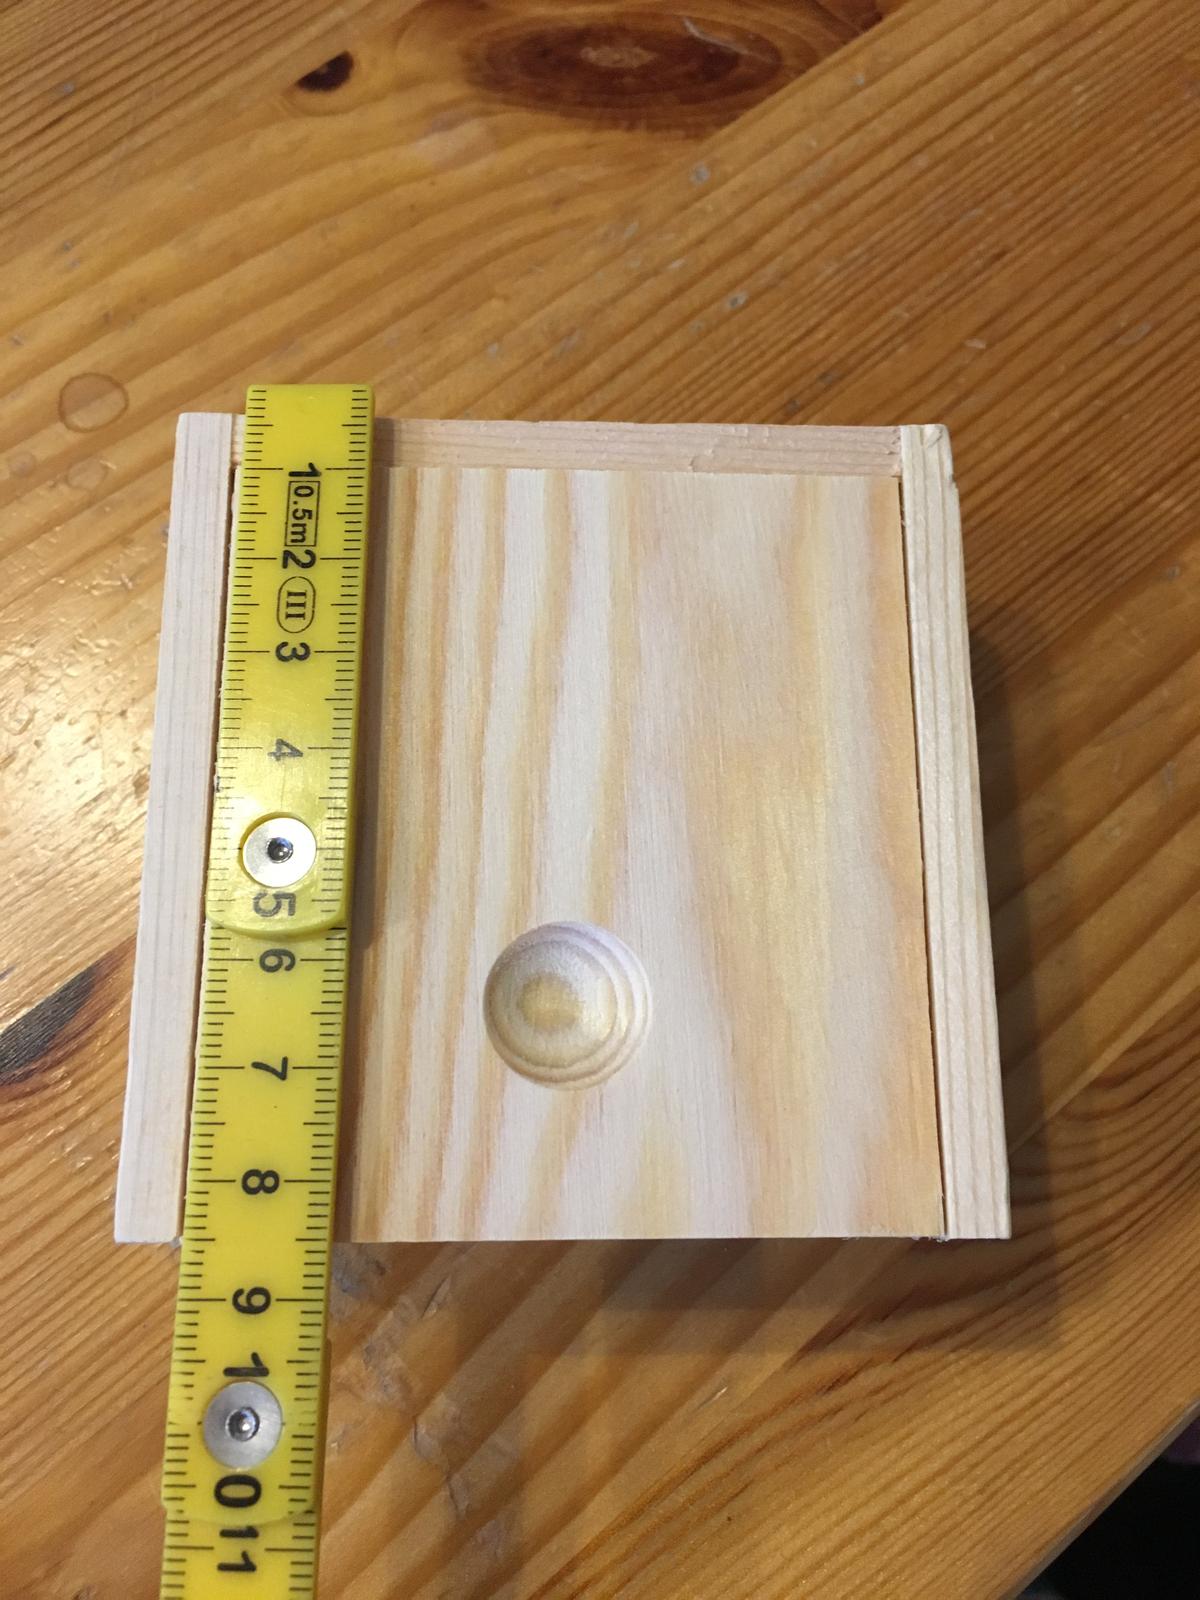 Dreveny box, sperkovnice, ctverec - Obrázek č. 1